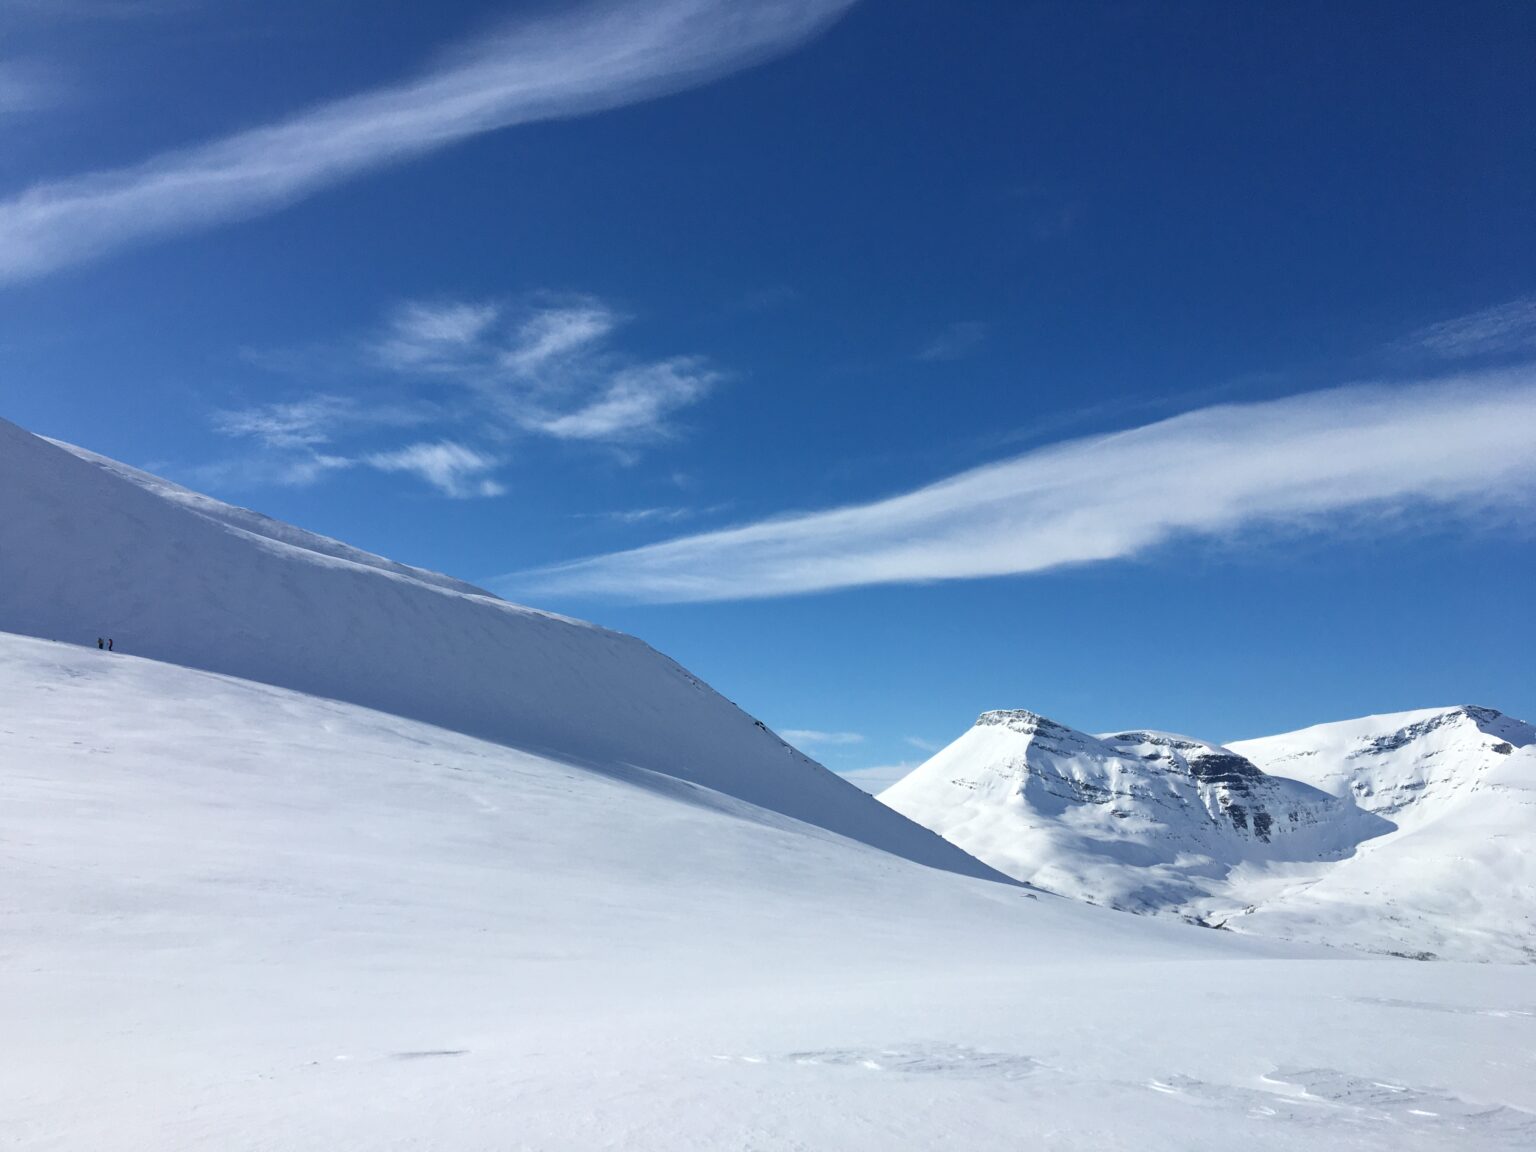 Preparing to ski tour up the crux zone of Isinden Ridge in the Tamokdalen Backcountry